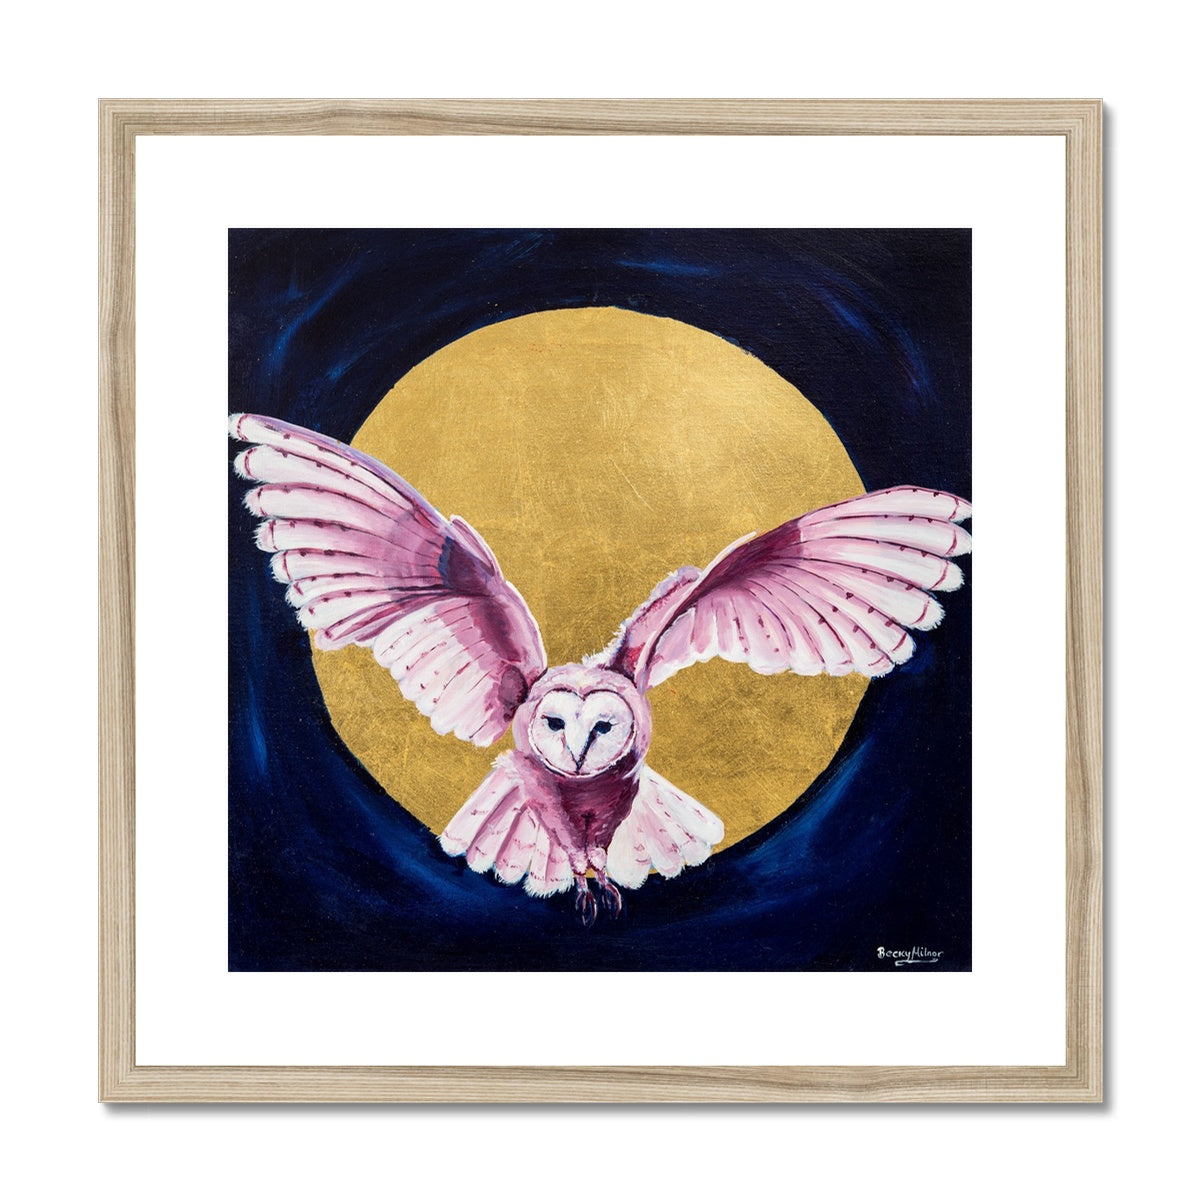 Selena the Owl Framed & Mounted Print